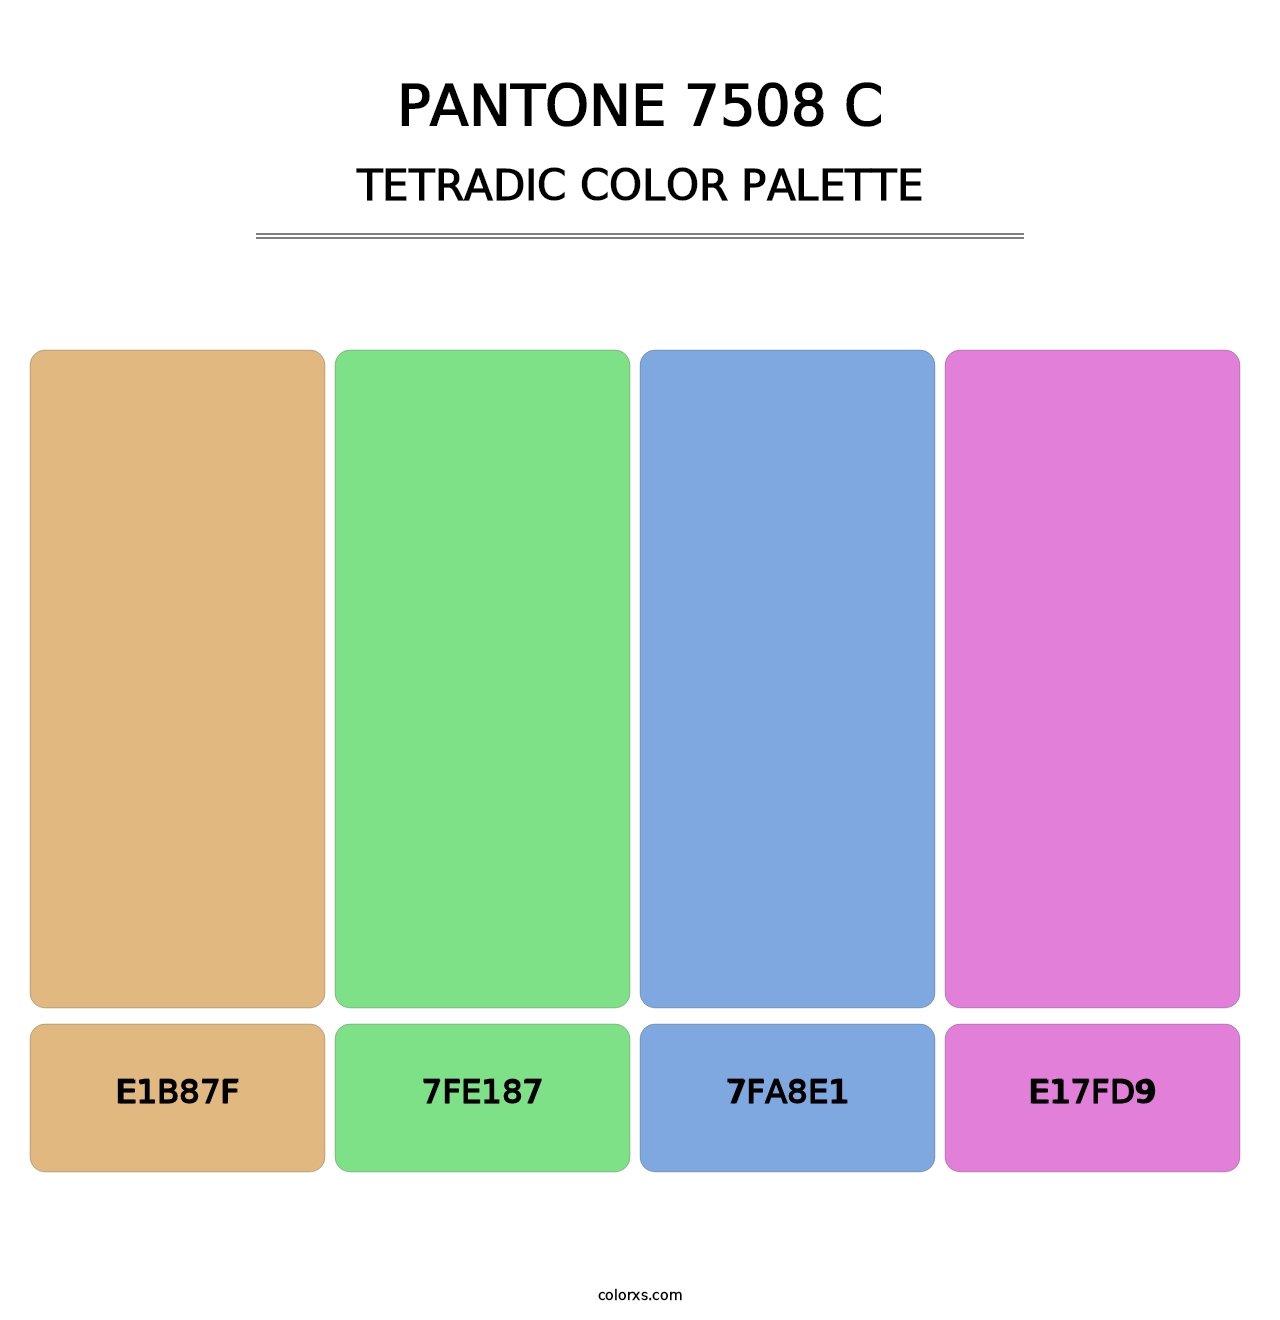 PANTONE 7508 C - Tetradic Color Palette